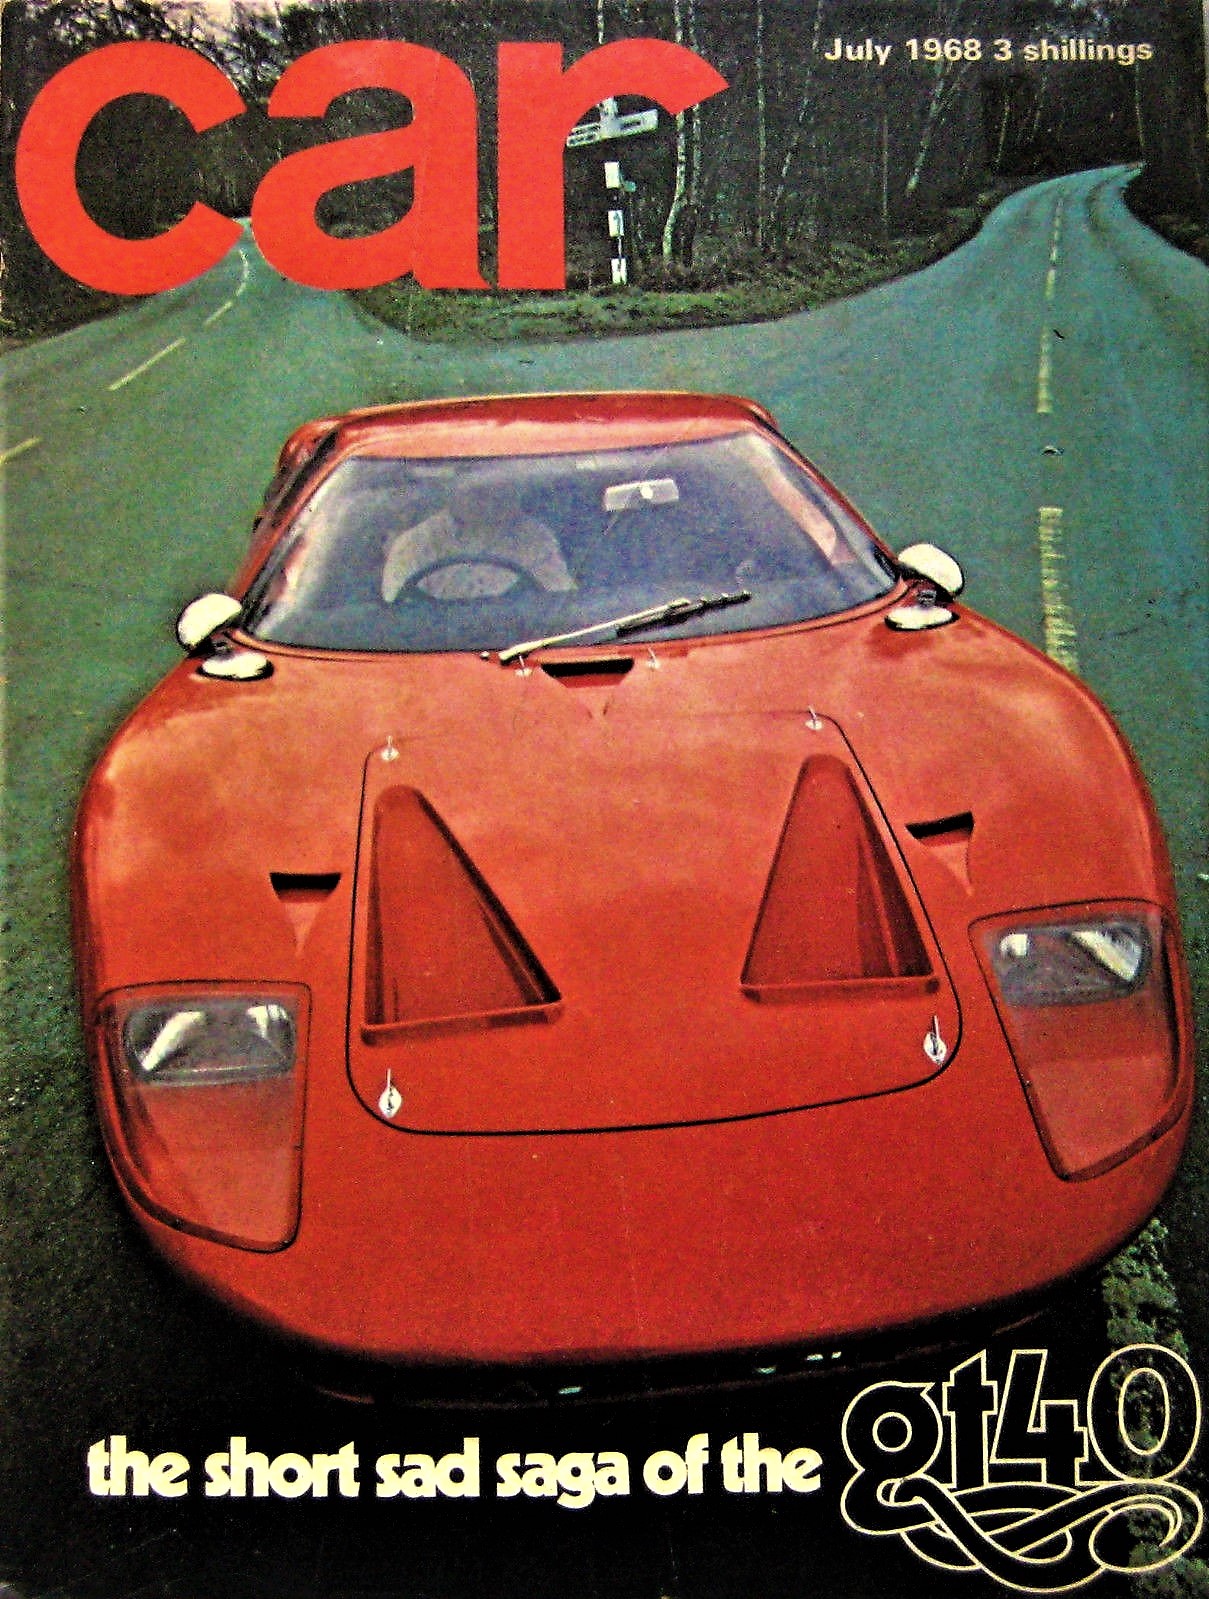 GT40 CAR JULY 1968.jpg  by Villain